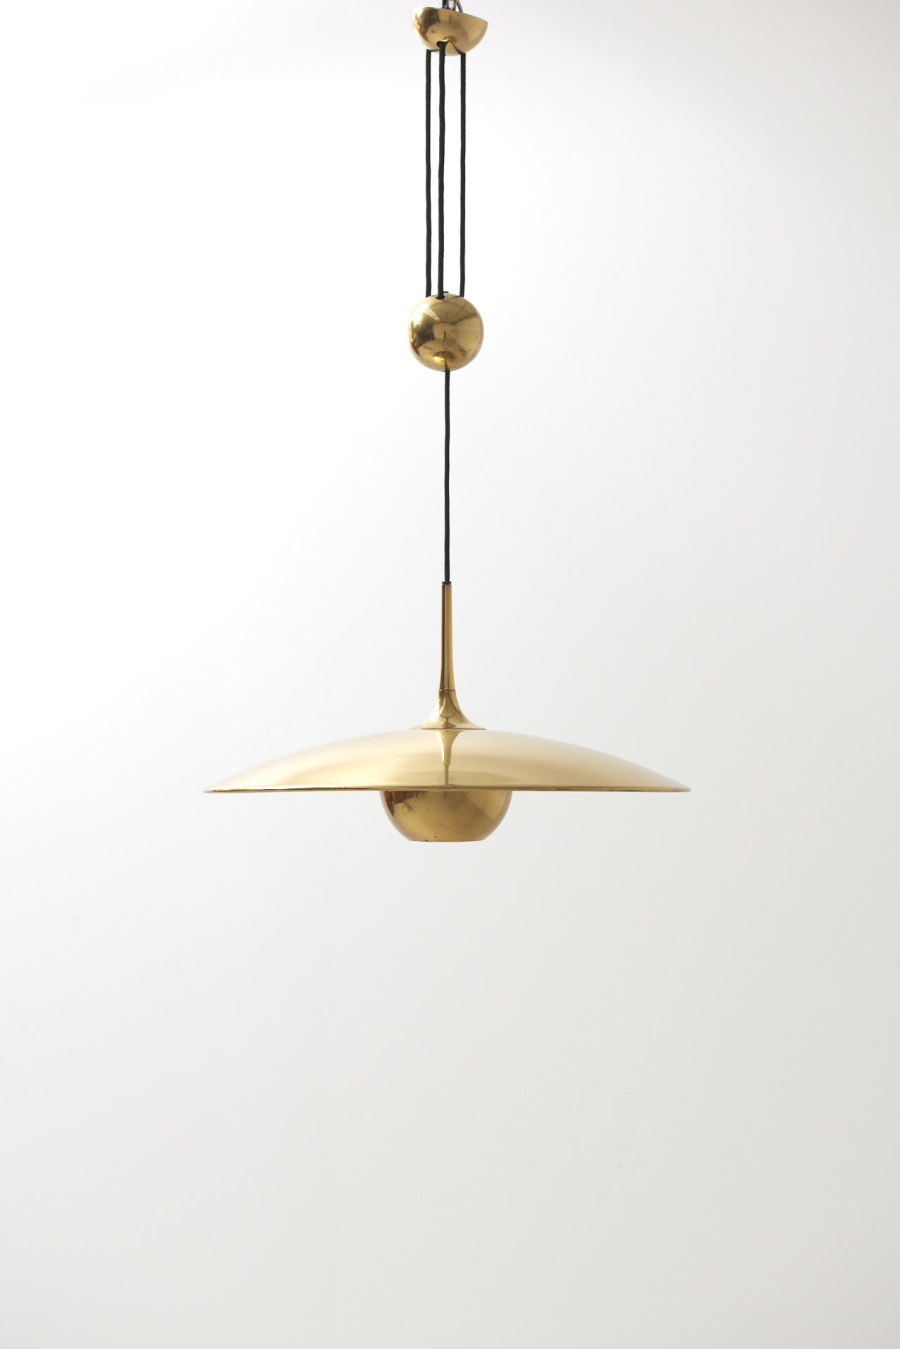 modestfurniture-vintage-2167-adjustable-ceiling-lamp-brass-florian-schulz01